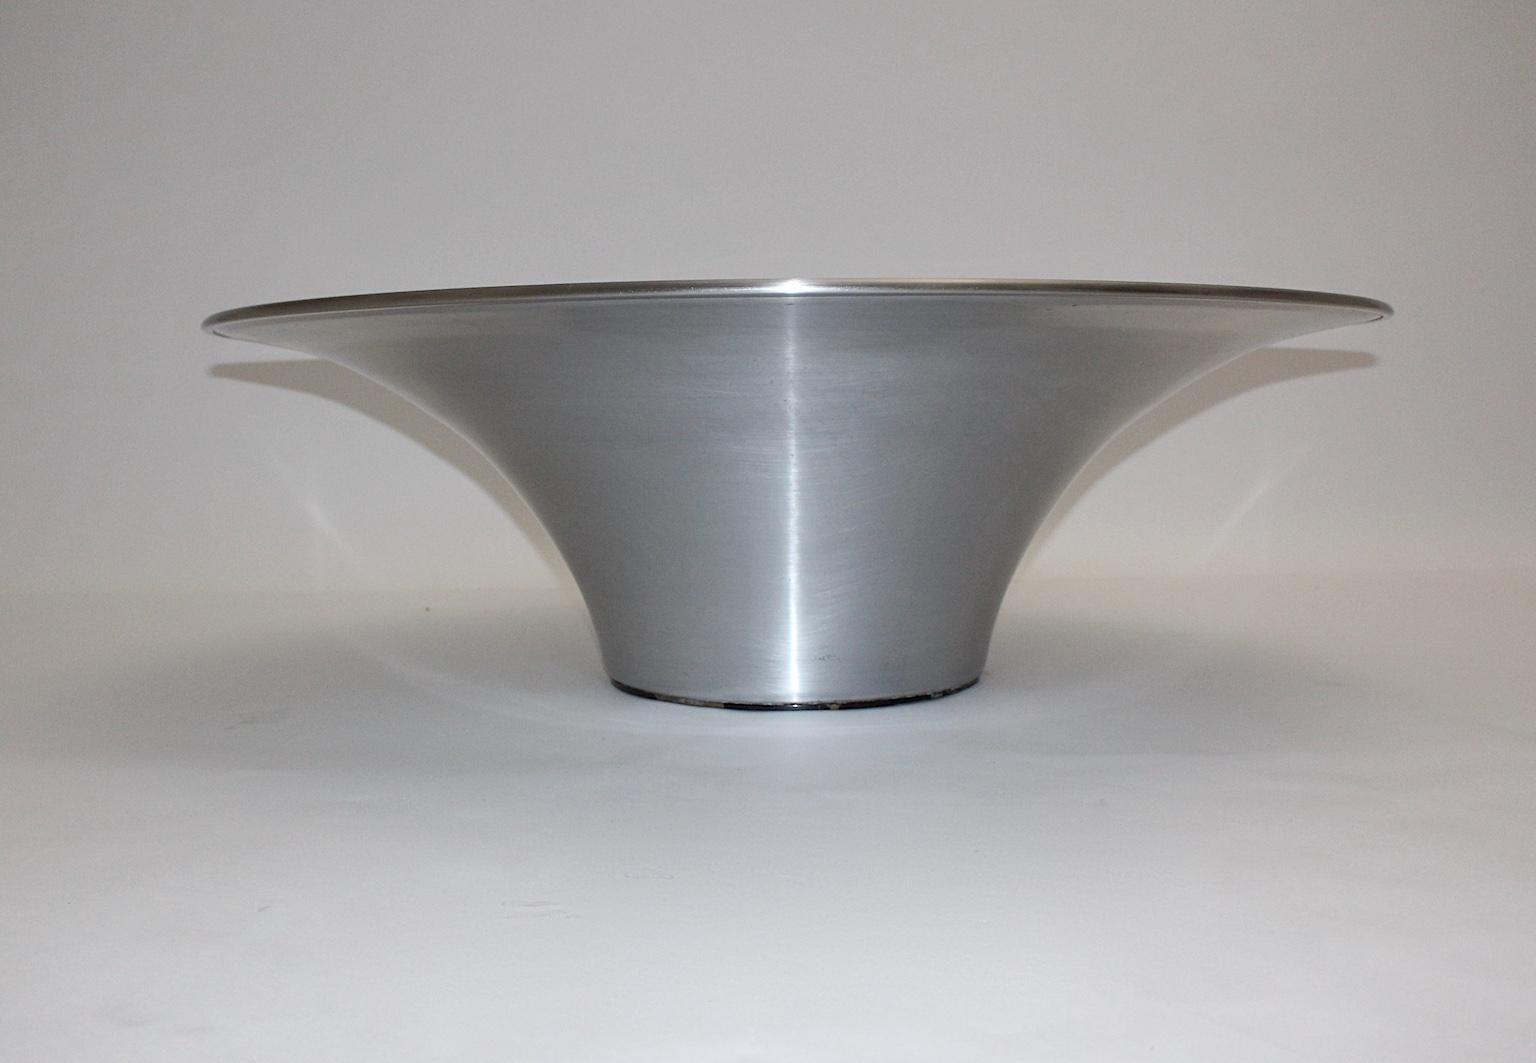 Italian Modern Aluminum Stainless Steel Coffee Table Yasuhiro Shito 2002 Cattelan